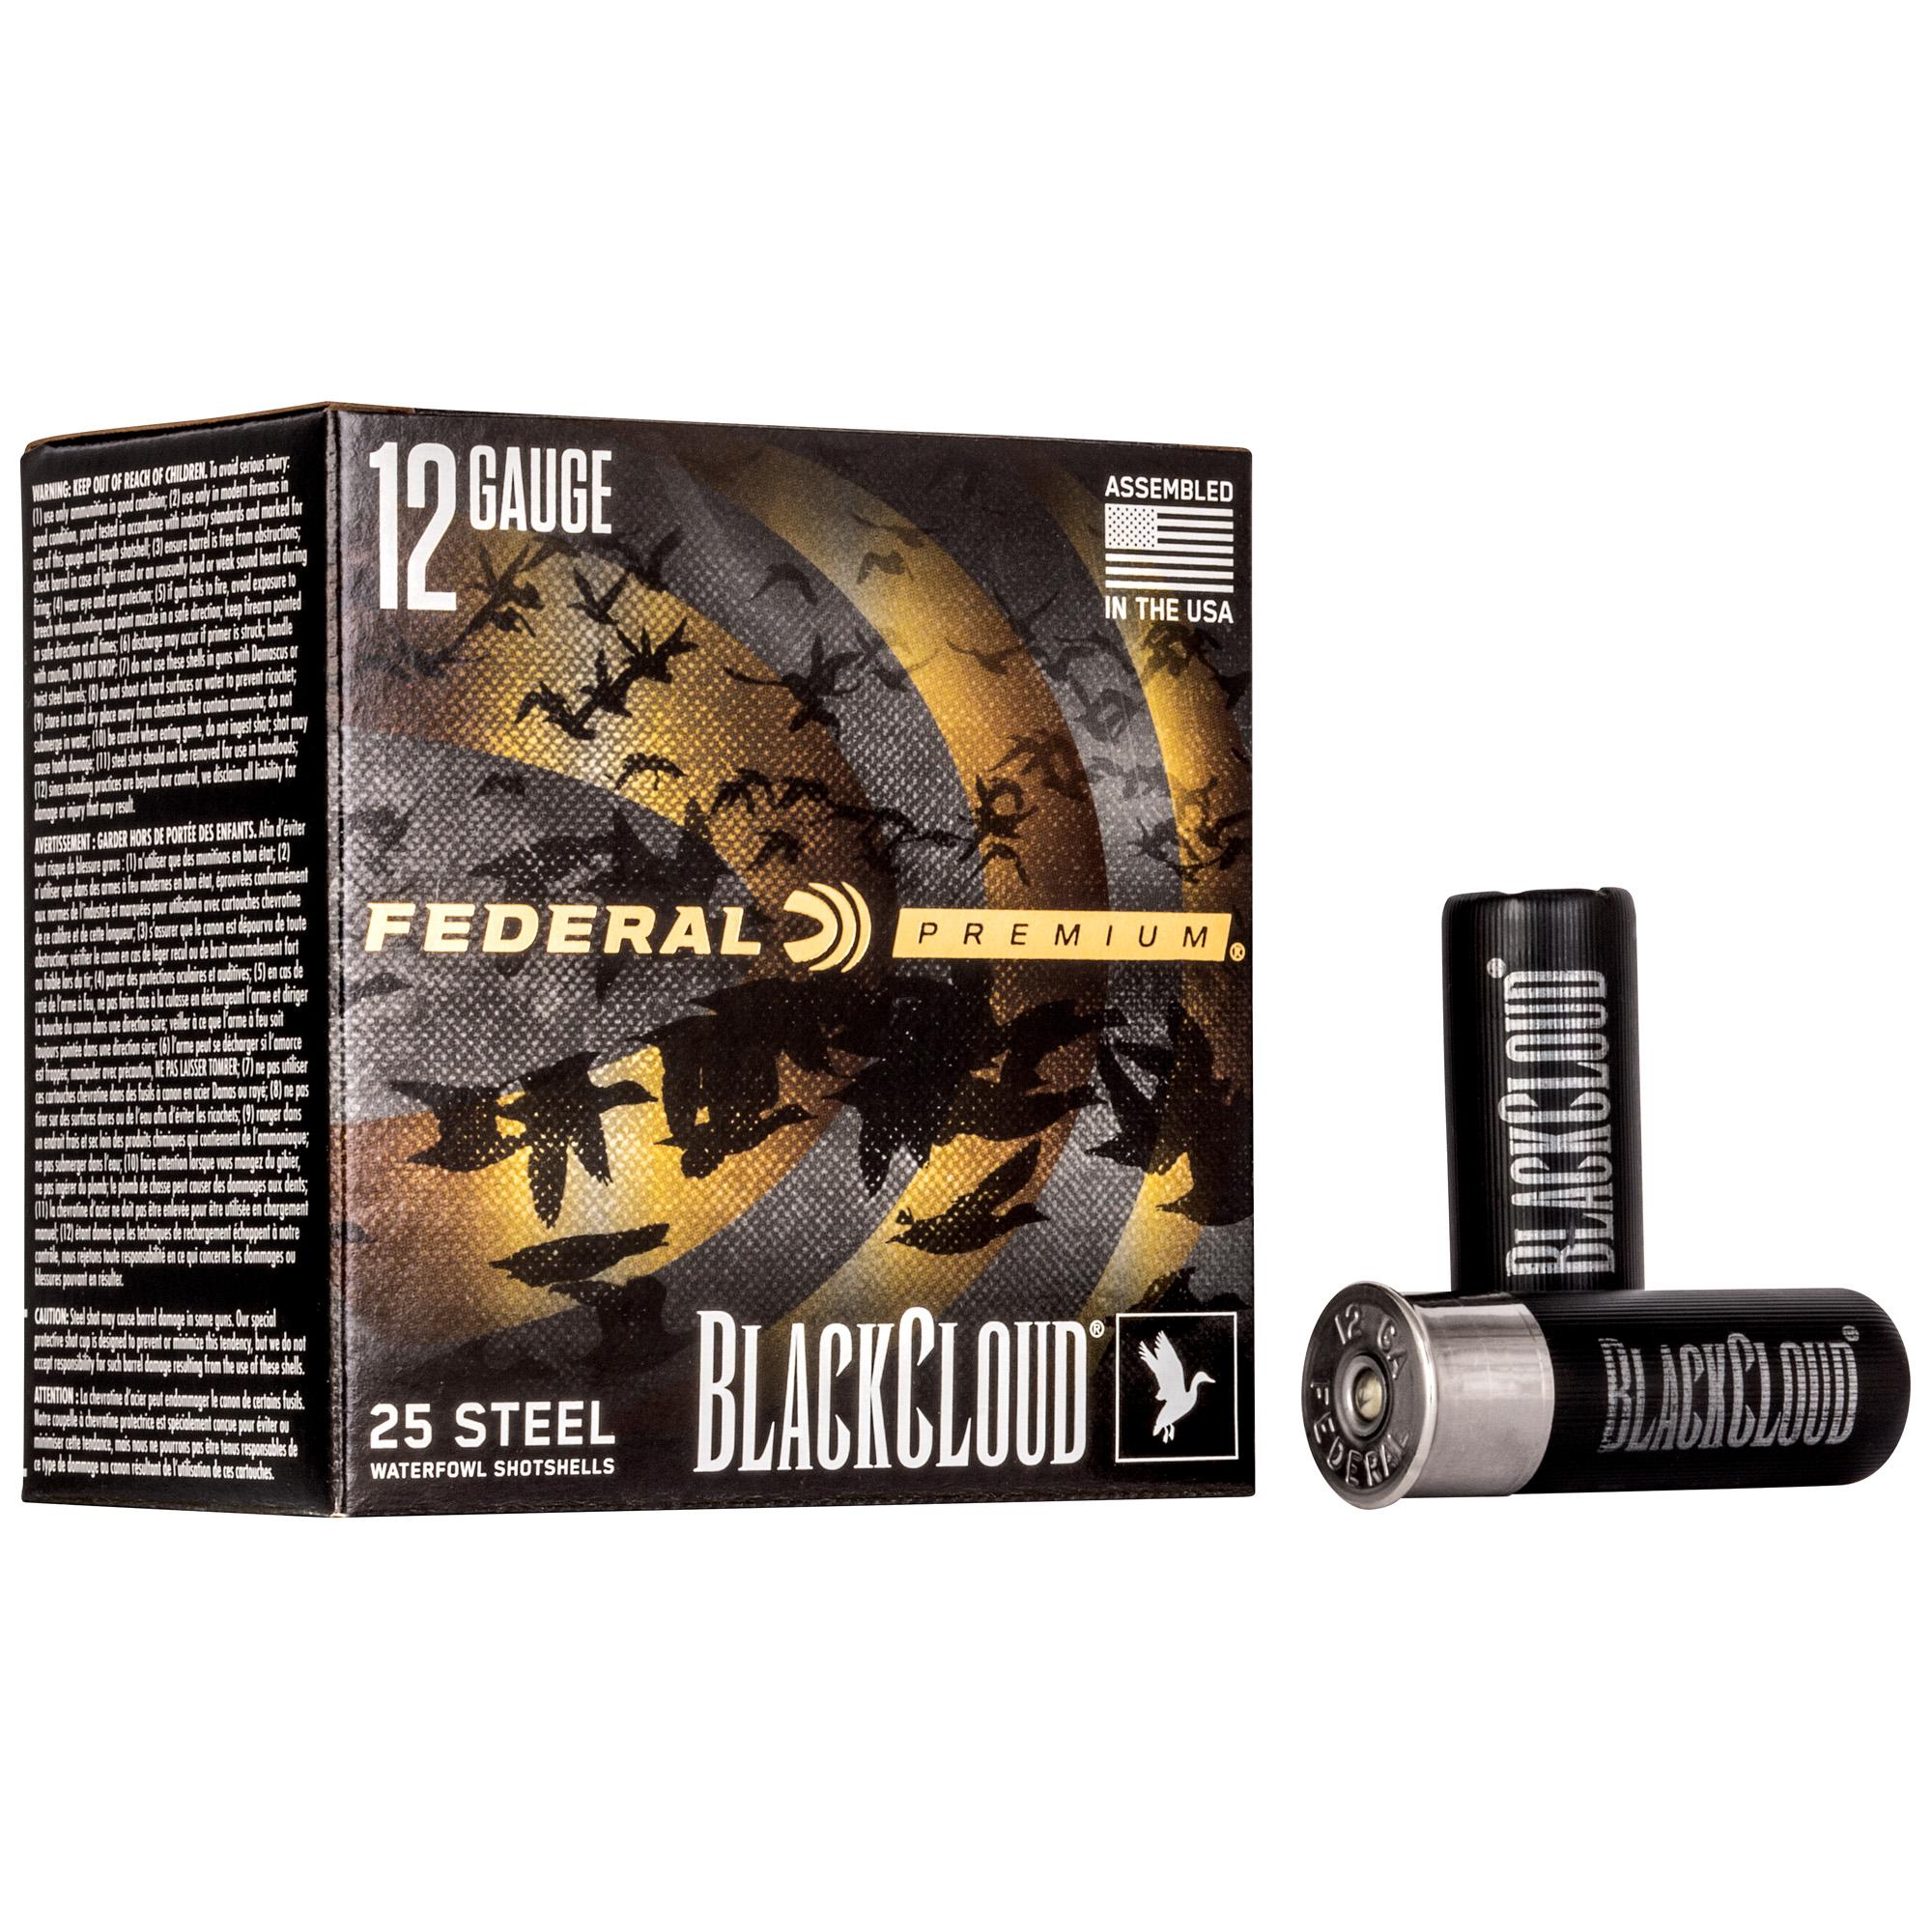 Shot Shell Ammunition FED BLK CLOUD 12GA 2.75 #4 25/250 image 1